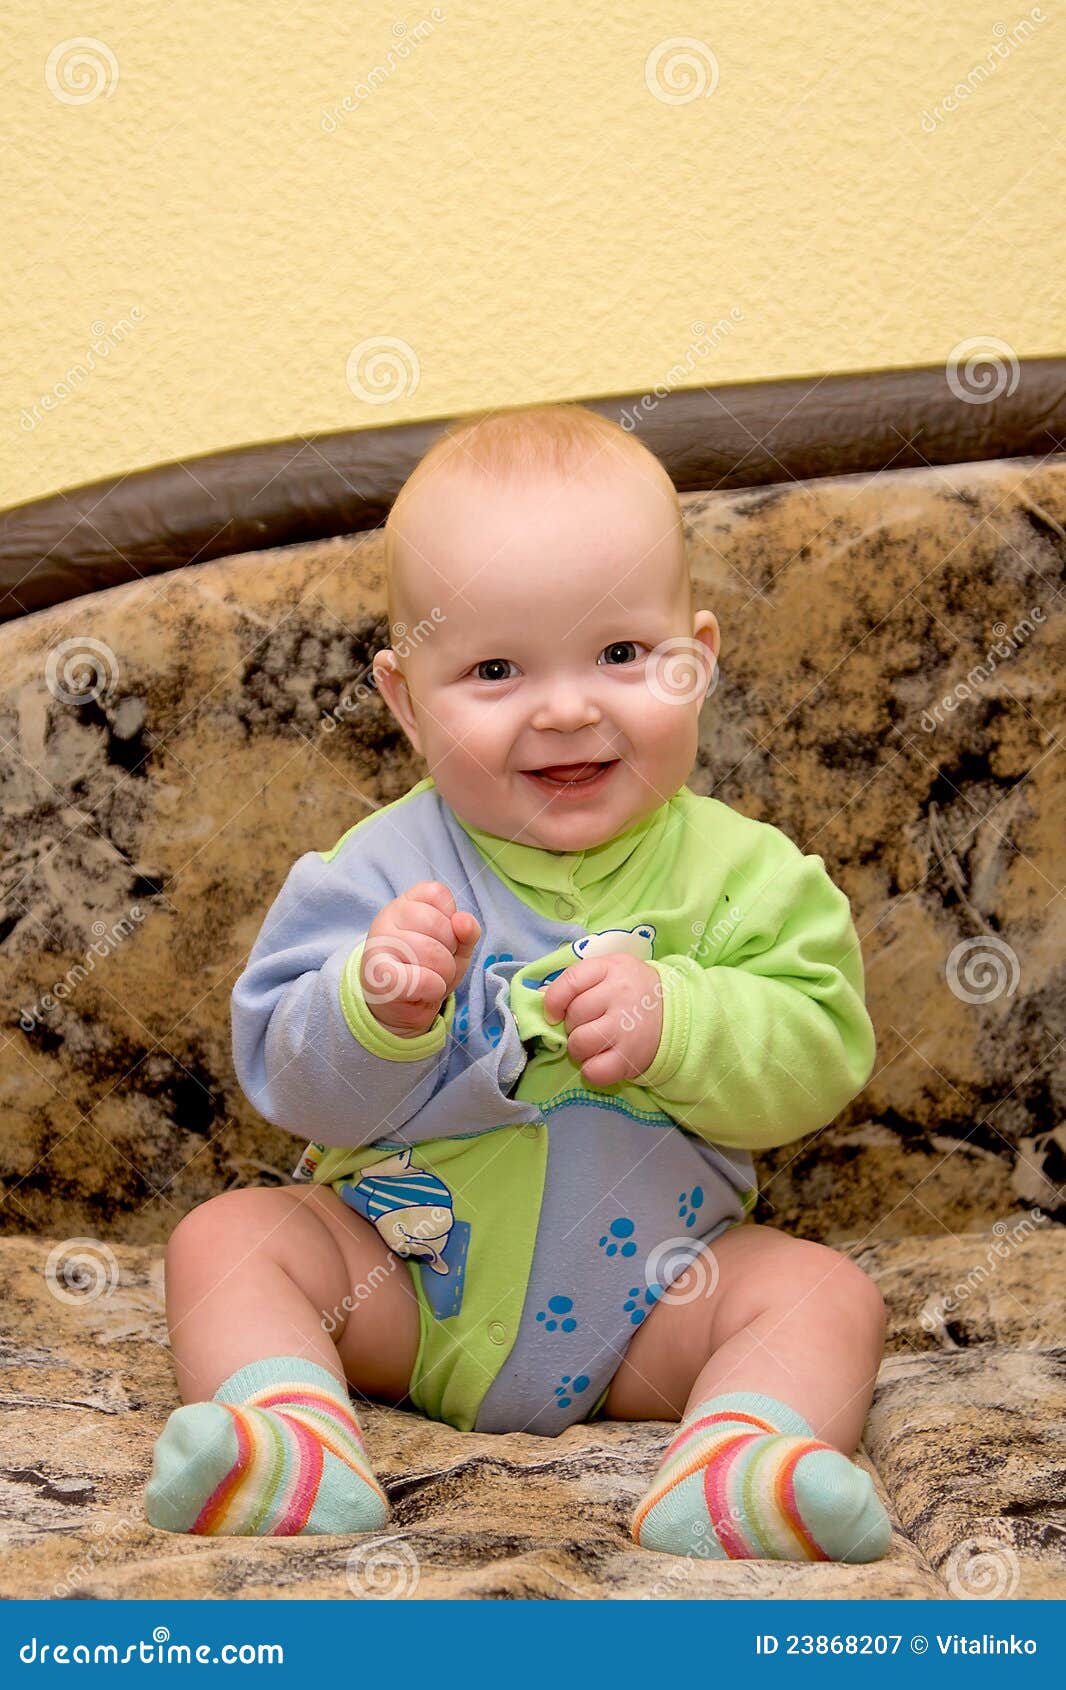 Baby Sitting Royalty Free Stock Photography - Image: 23868207